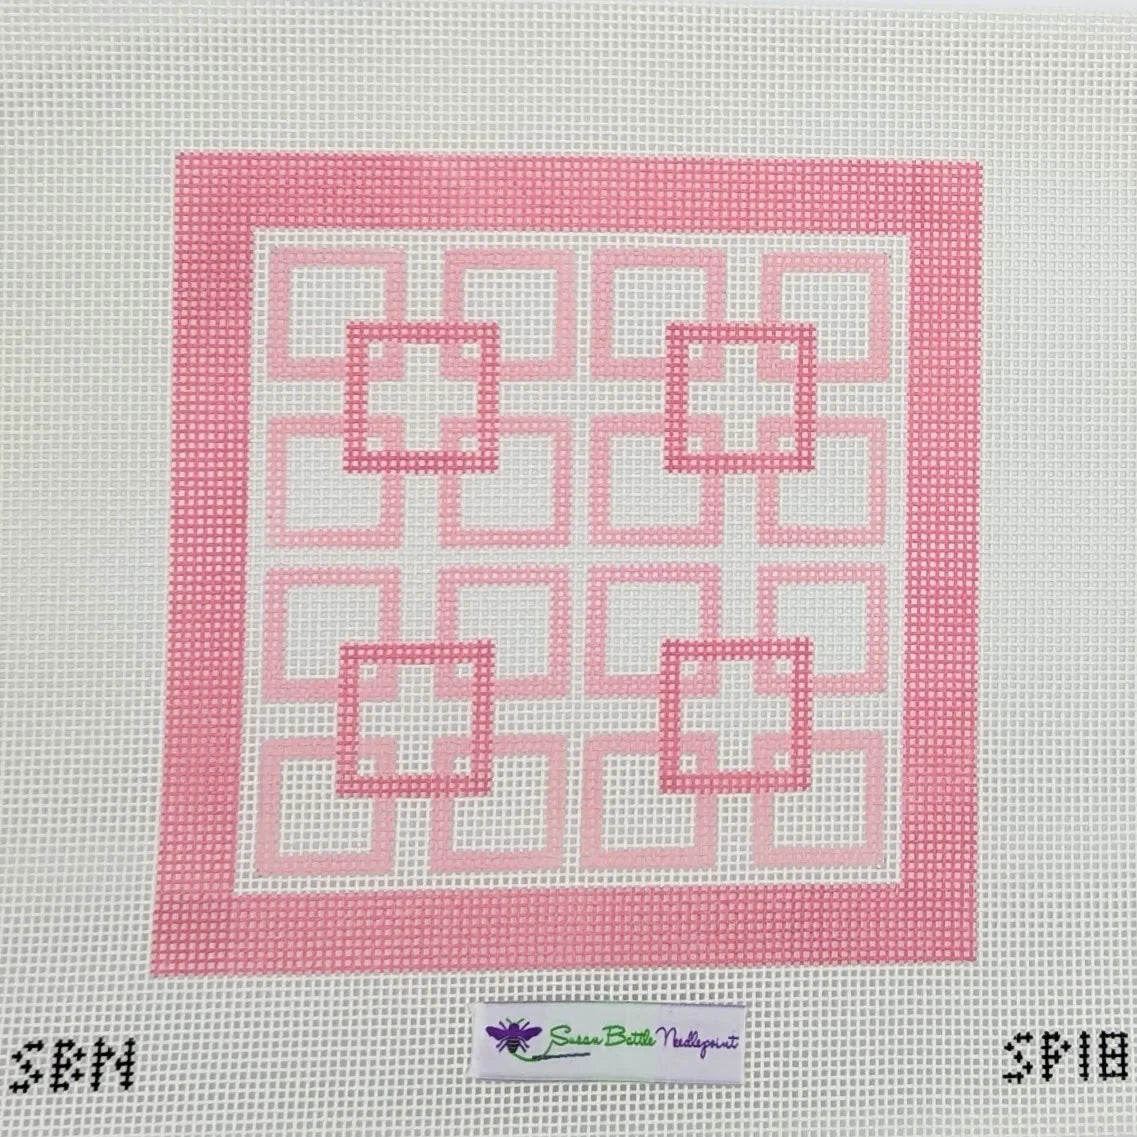 Susan Battle Sp18 10 mesh Shell Pink Squares Geometric